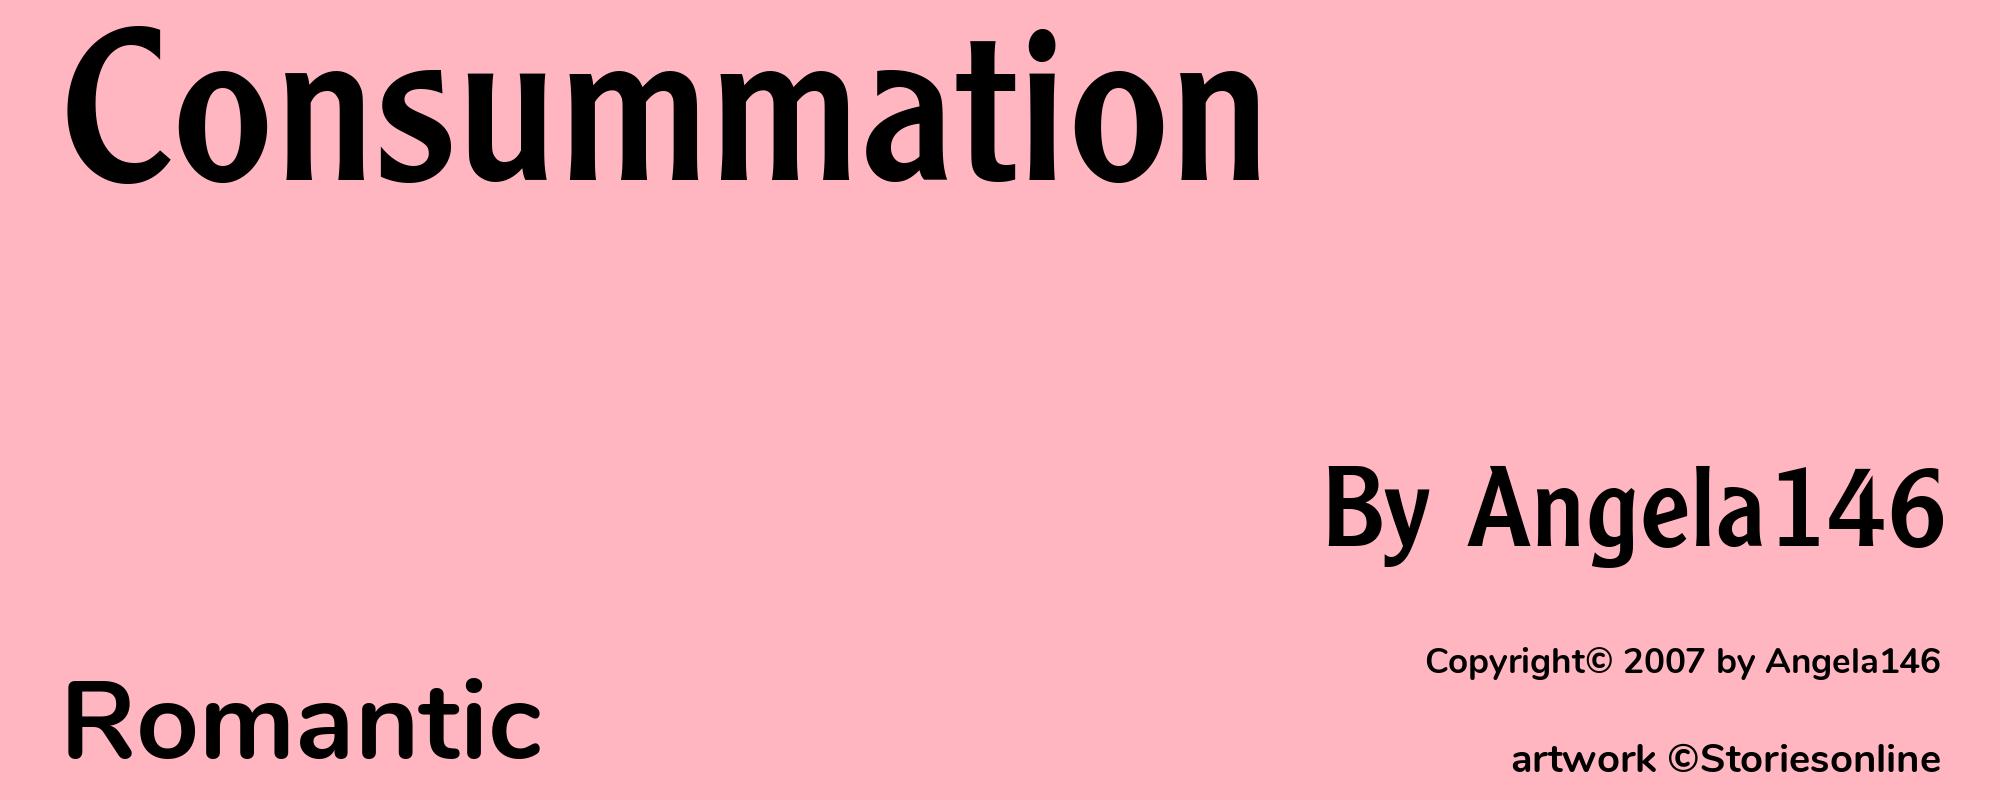 Consummation - Cover